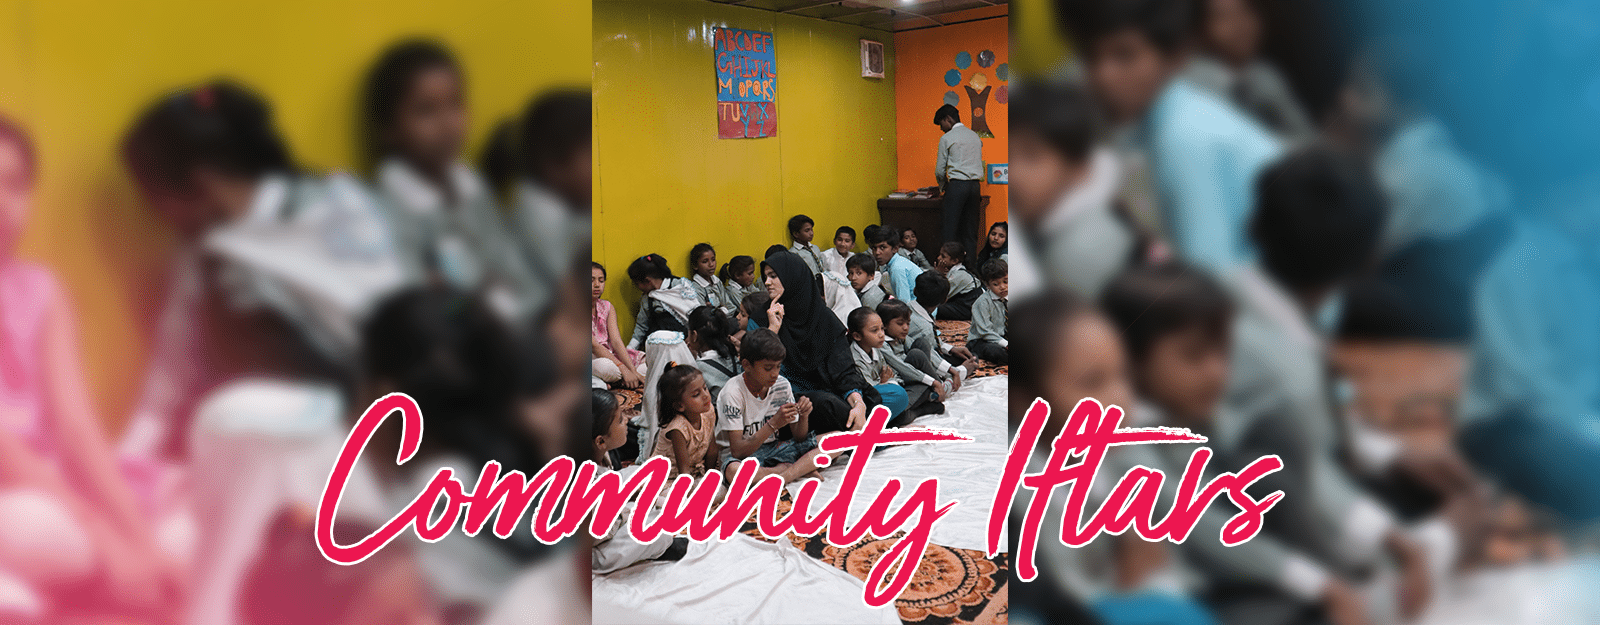 Community Iftars